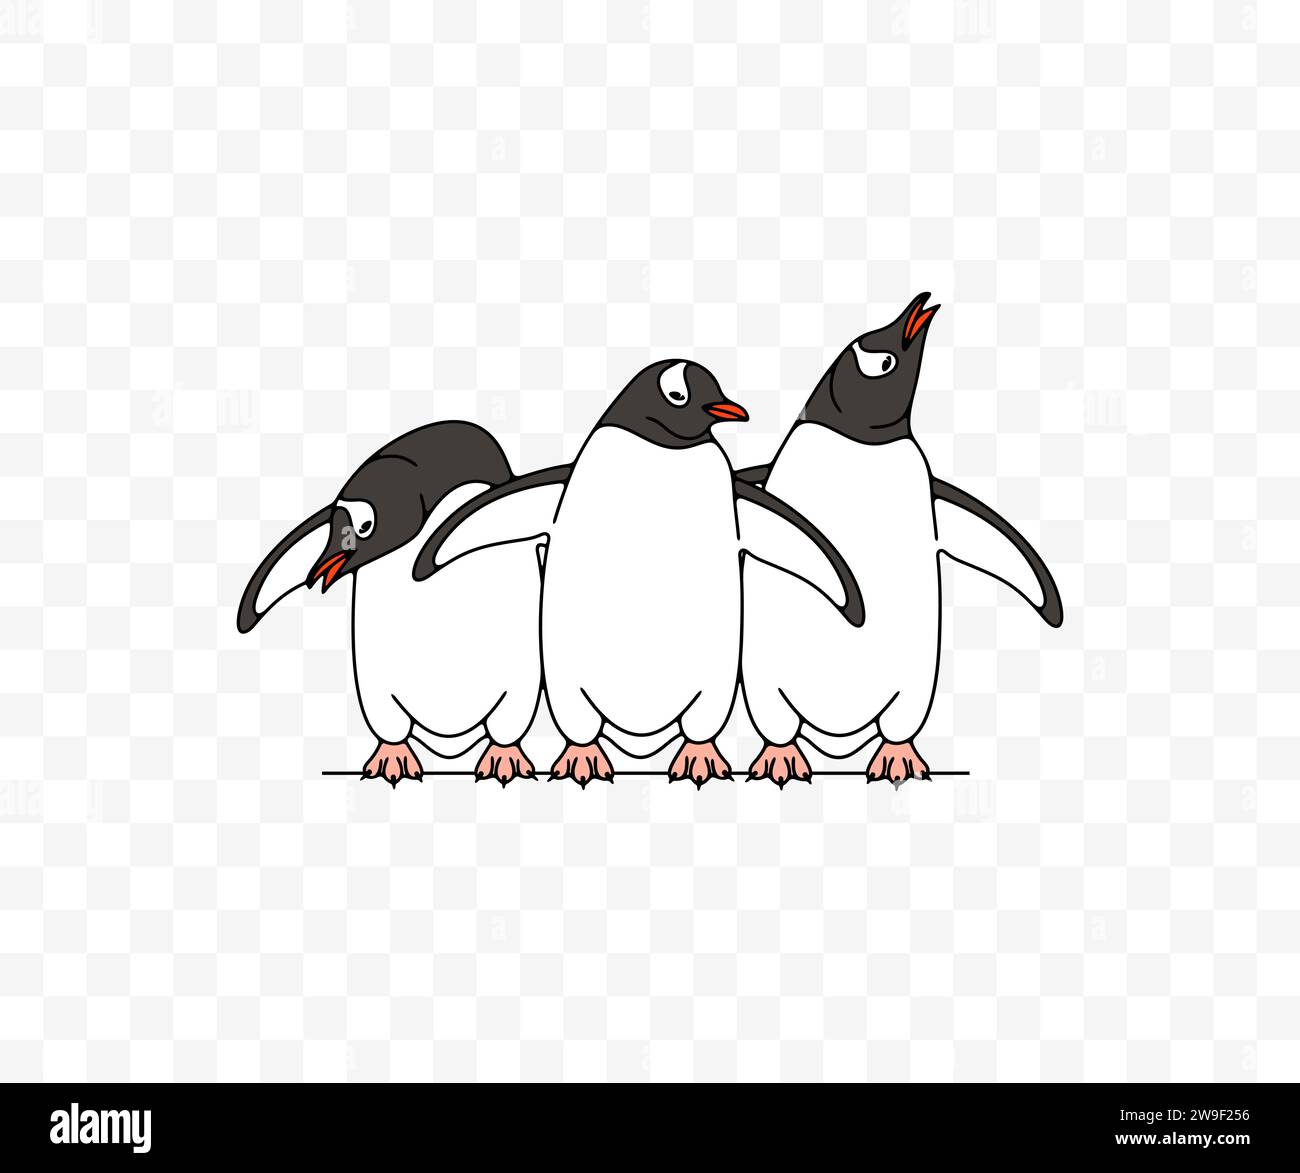 Subantarctic penguin or gentoo penguins, graphic design. Animal, bird, avian, feathered, antarctica and nature, vector design and illustration Stock Vector